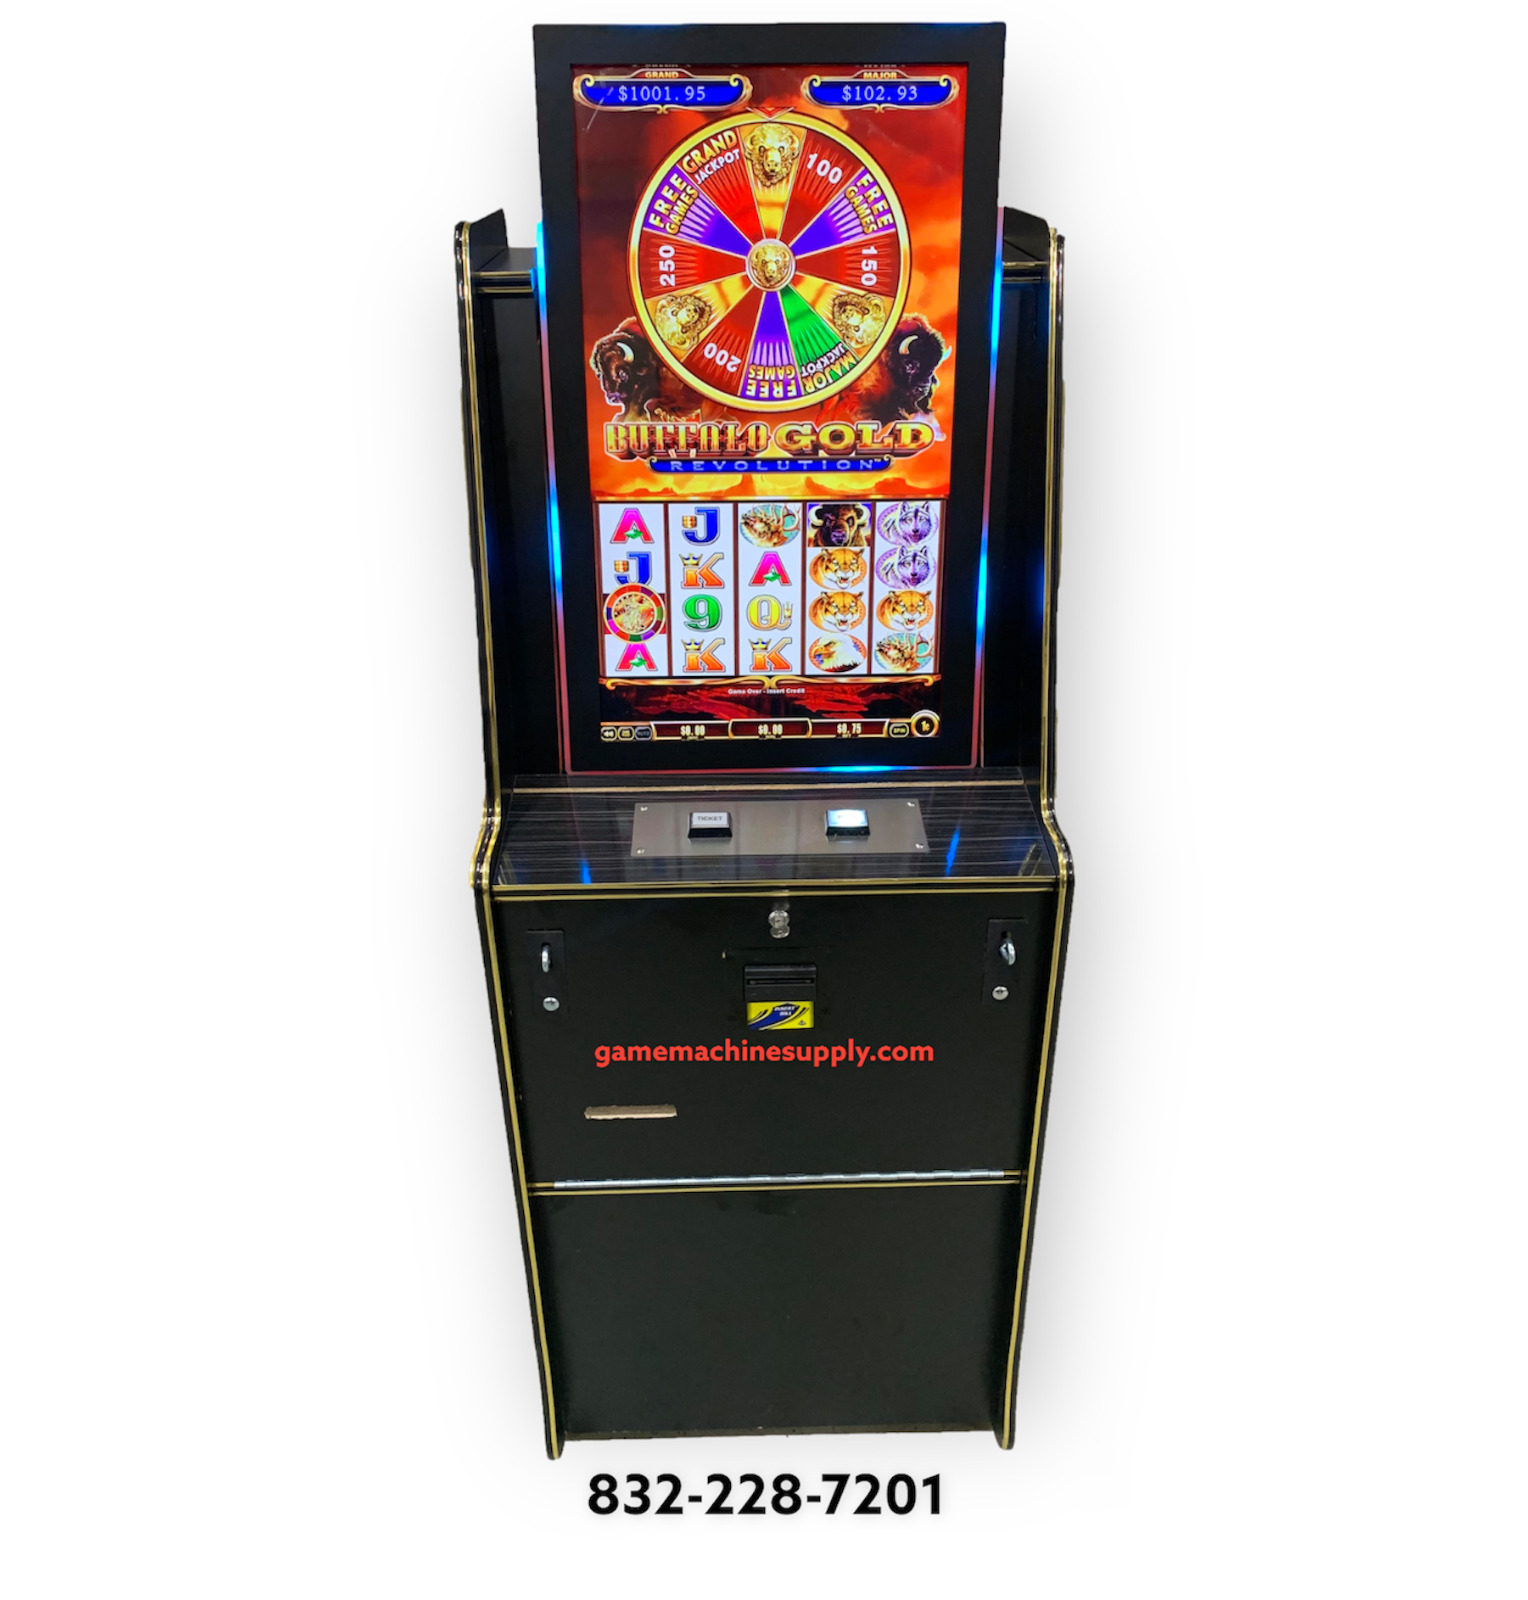 Buffalo Gold Revolution Game machine (Casino Machine) with Printer